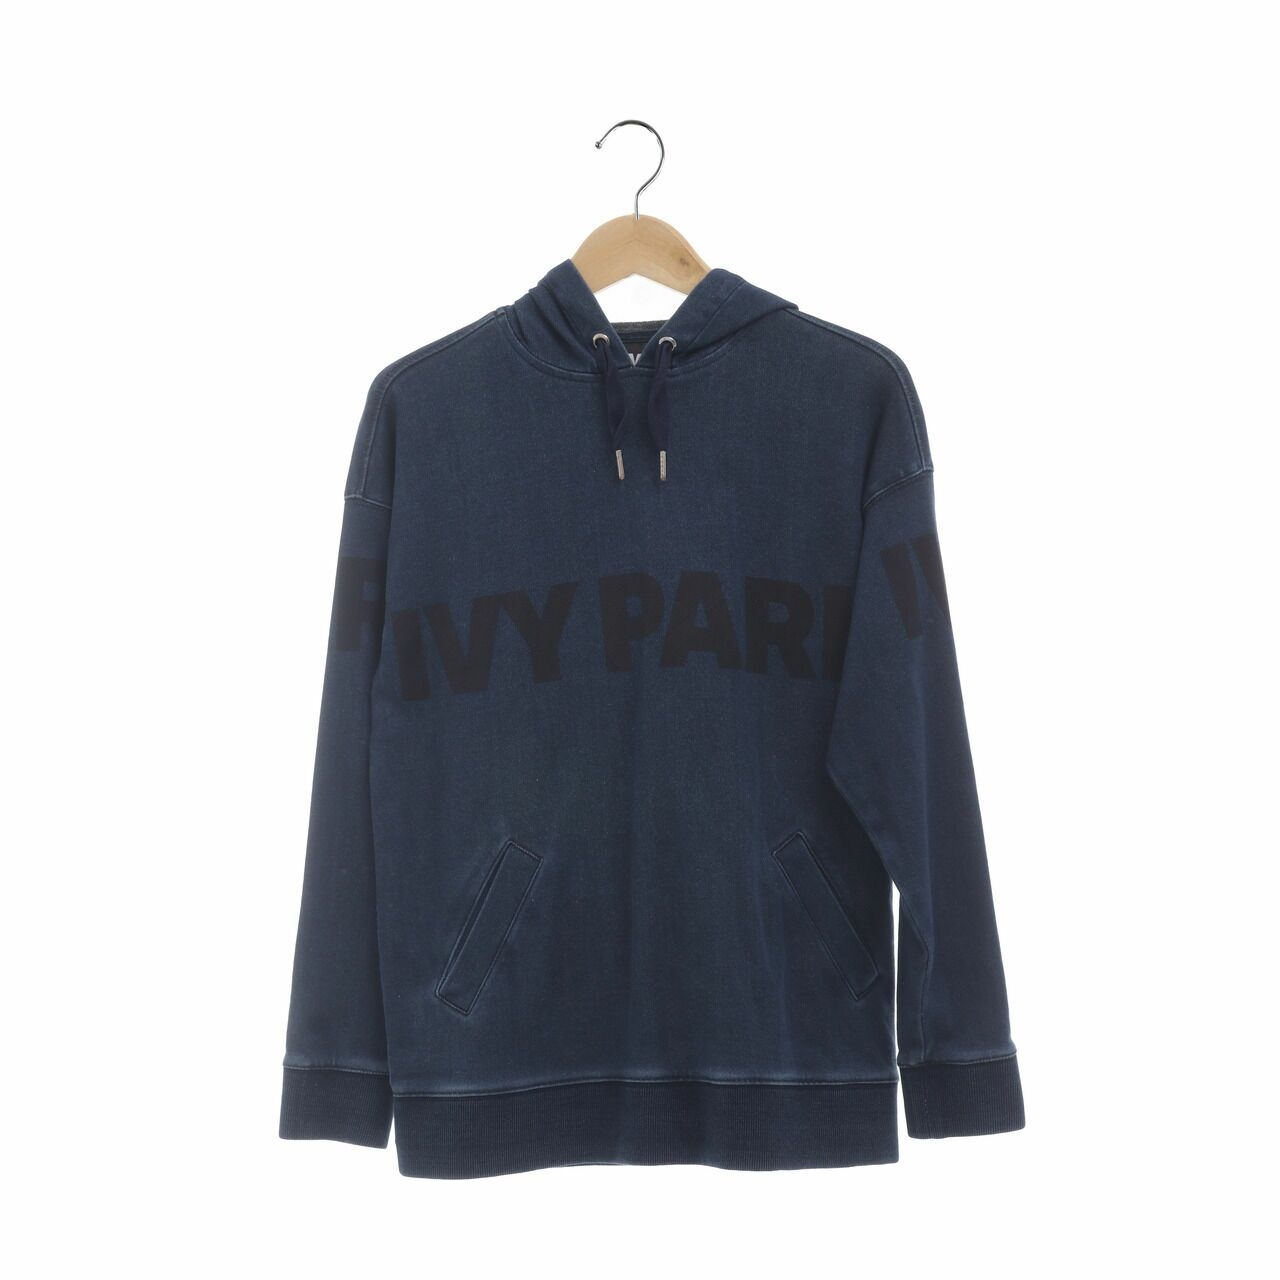 Ivy Park Blue Sweater